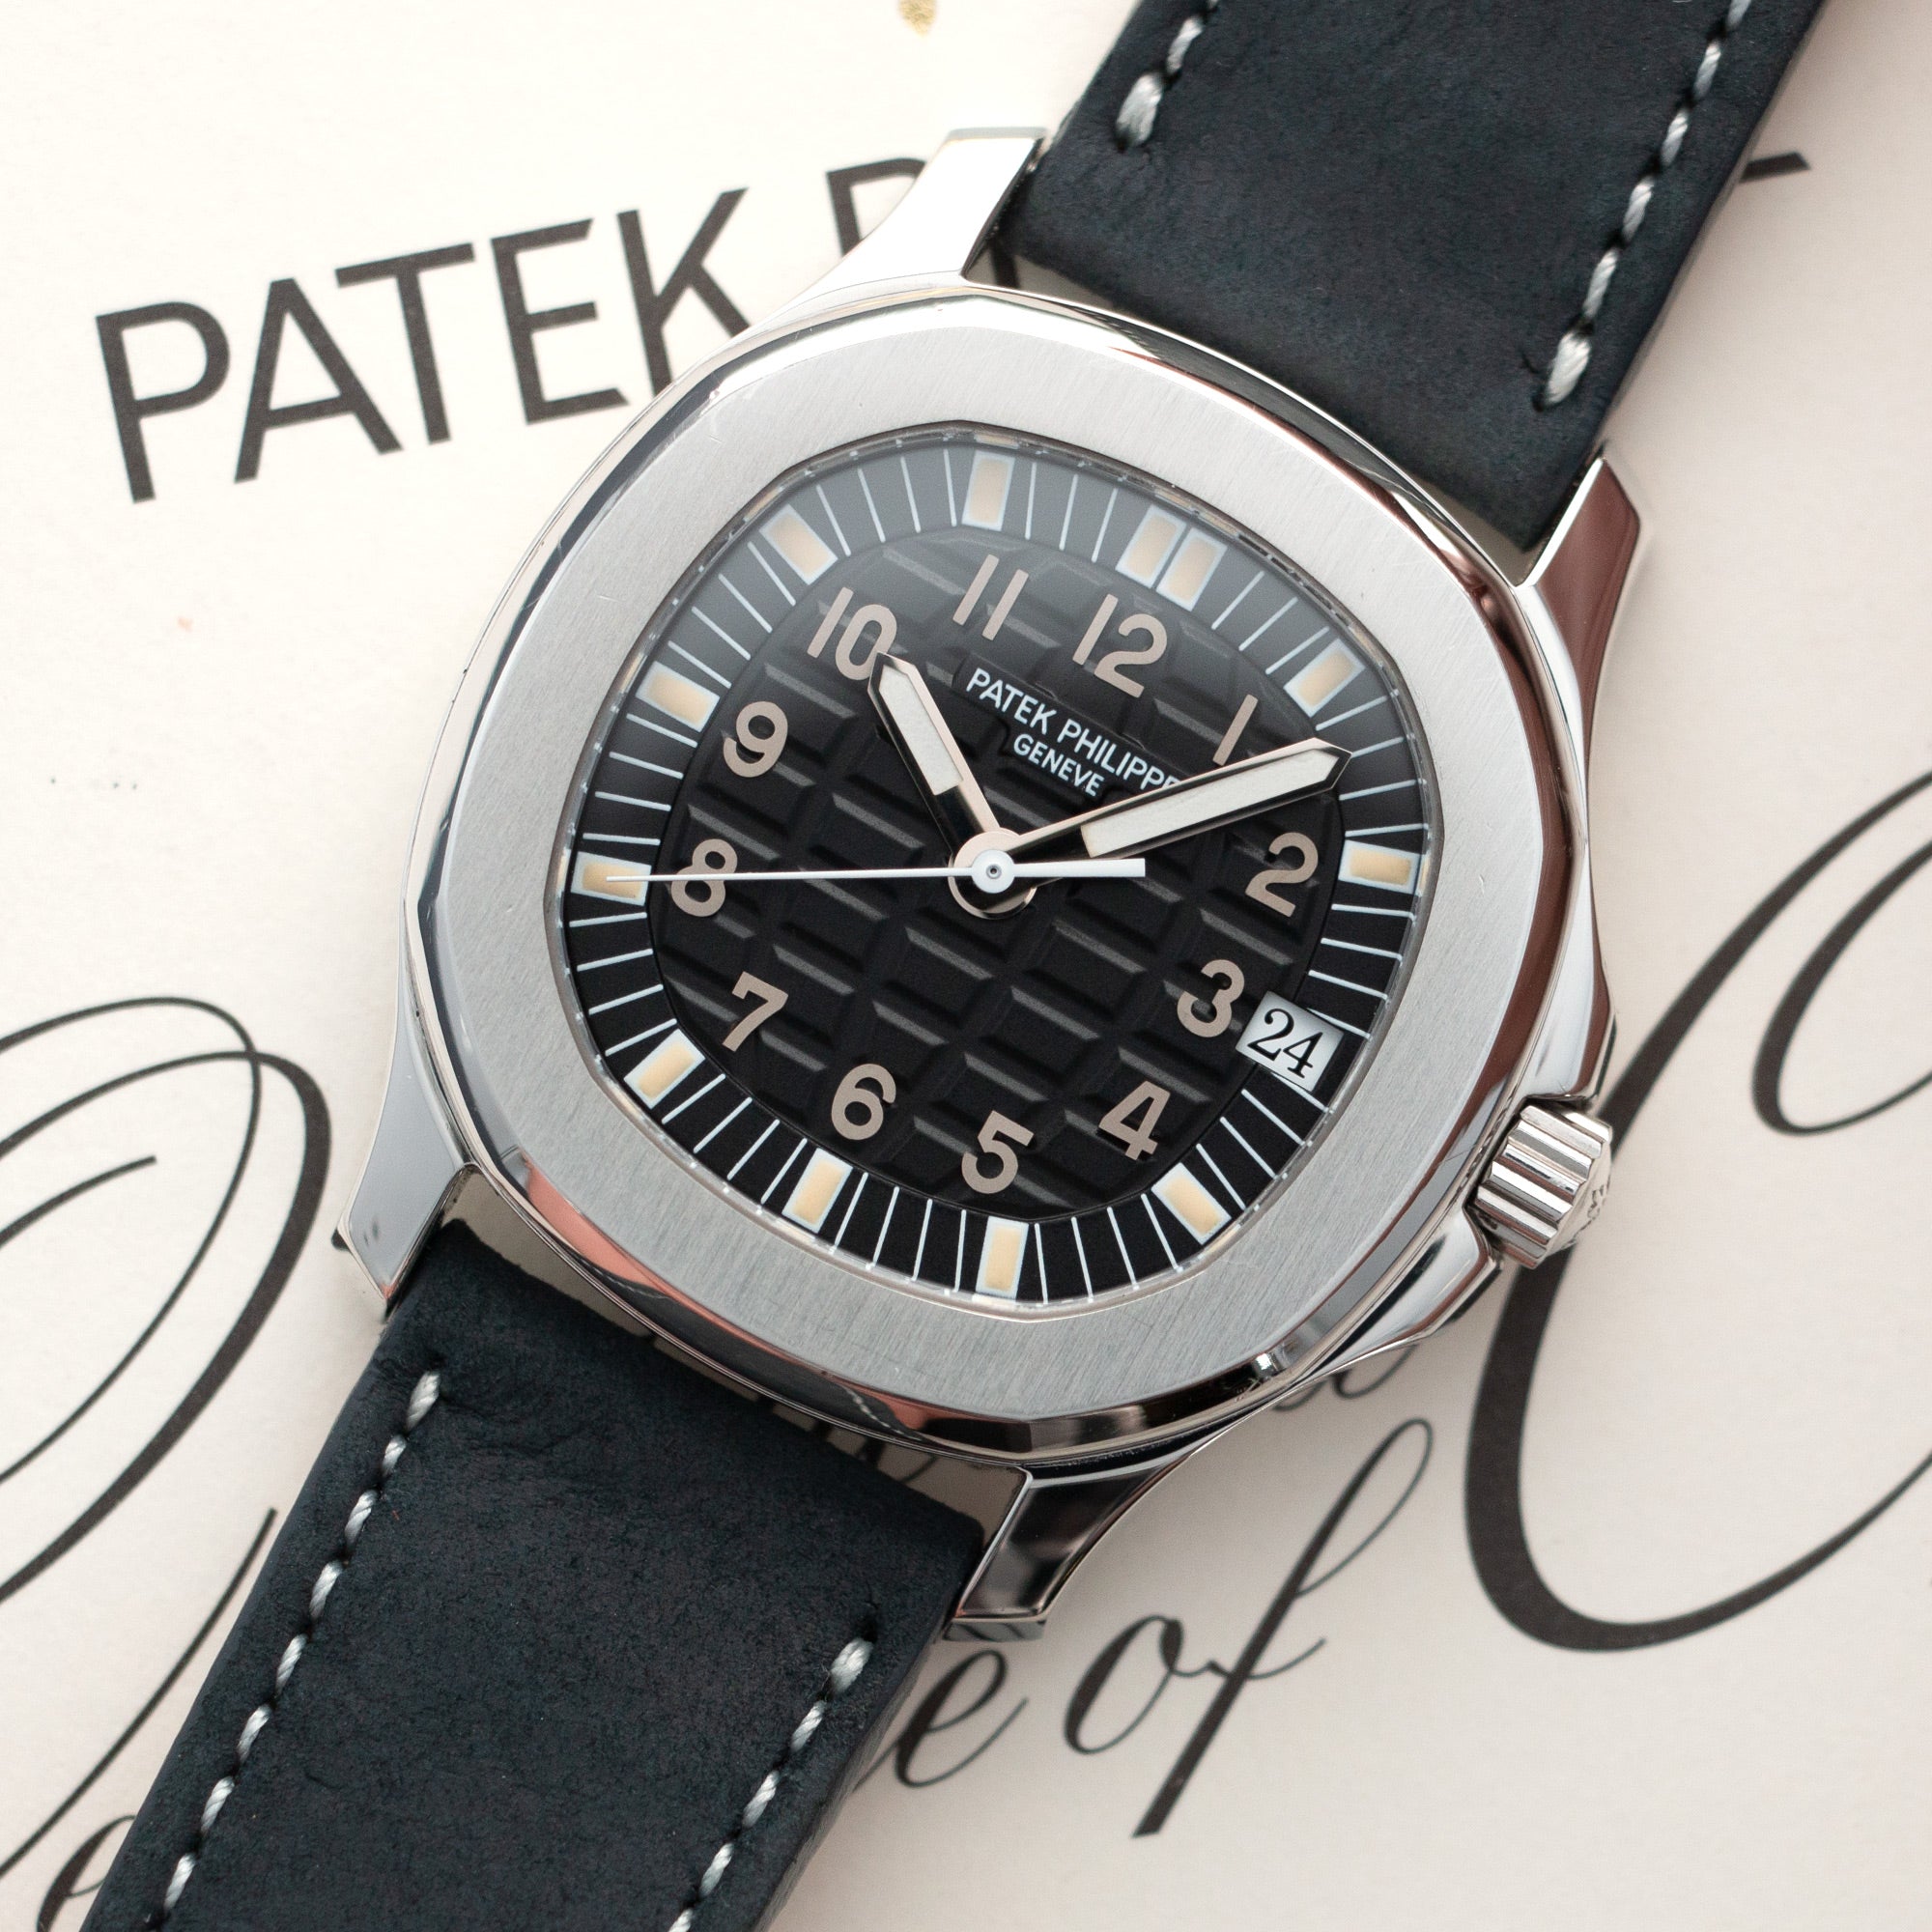 Patek Philippe - Patek Philippe Aquanaut Automatic Watch Ref. 5060, First Series Aquanaut with Original Paper - The Keystone Watches